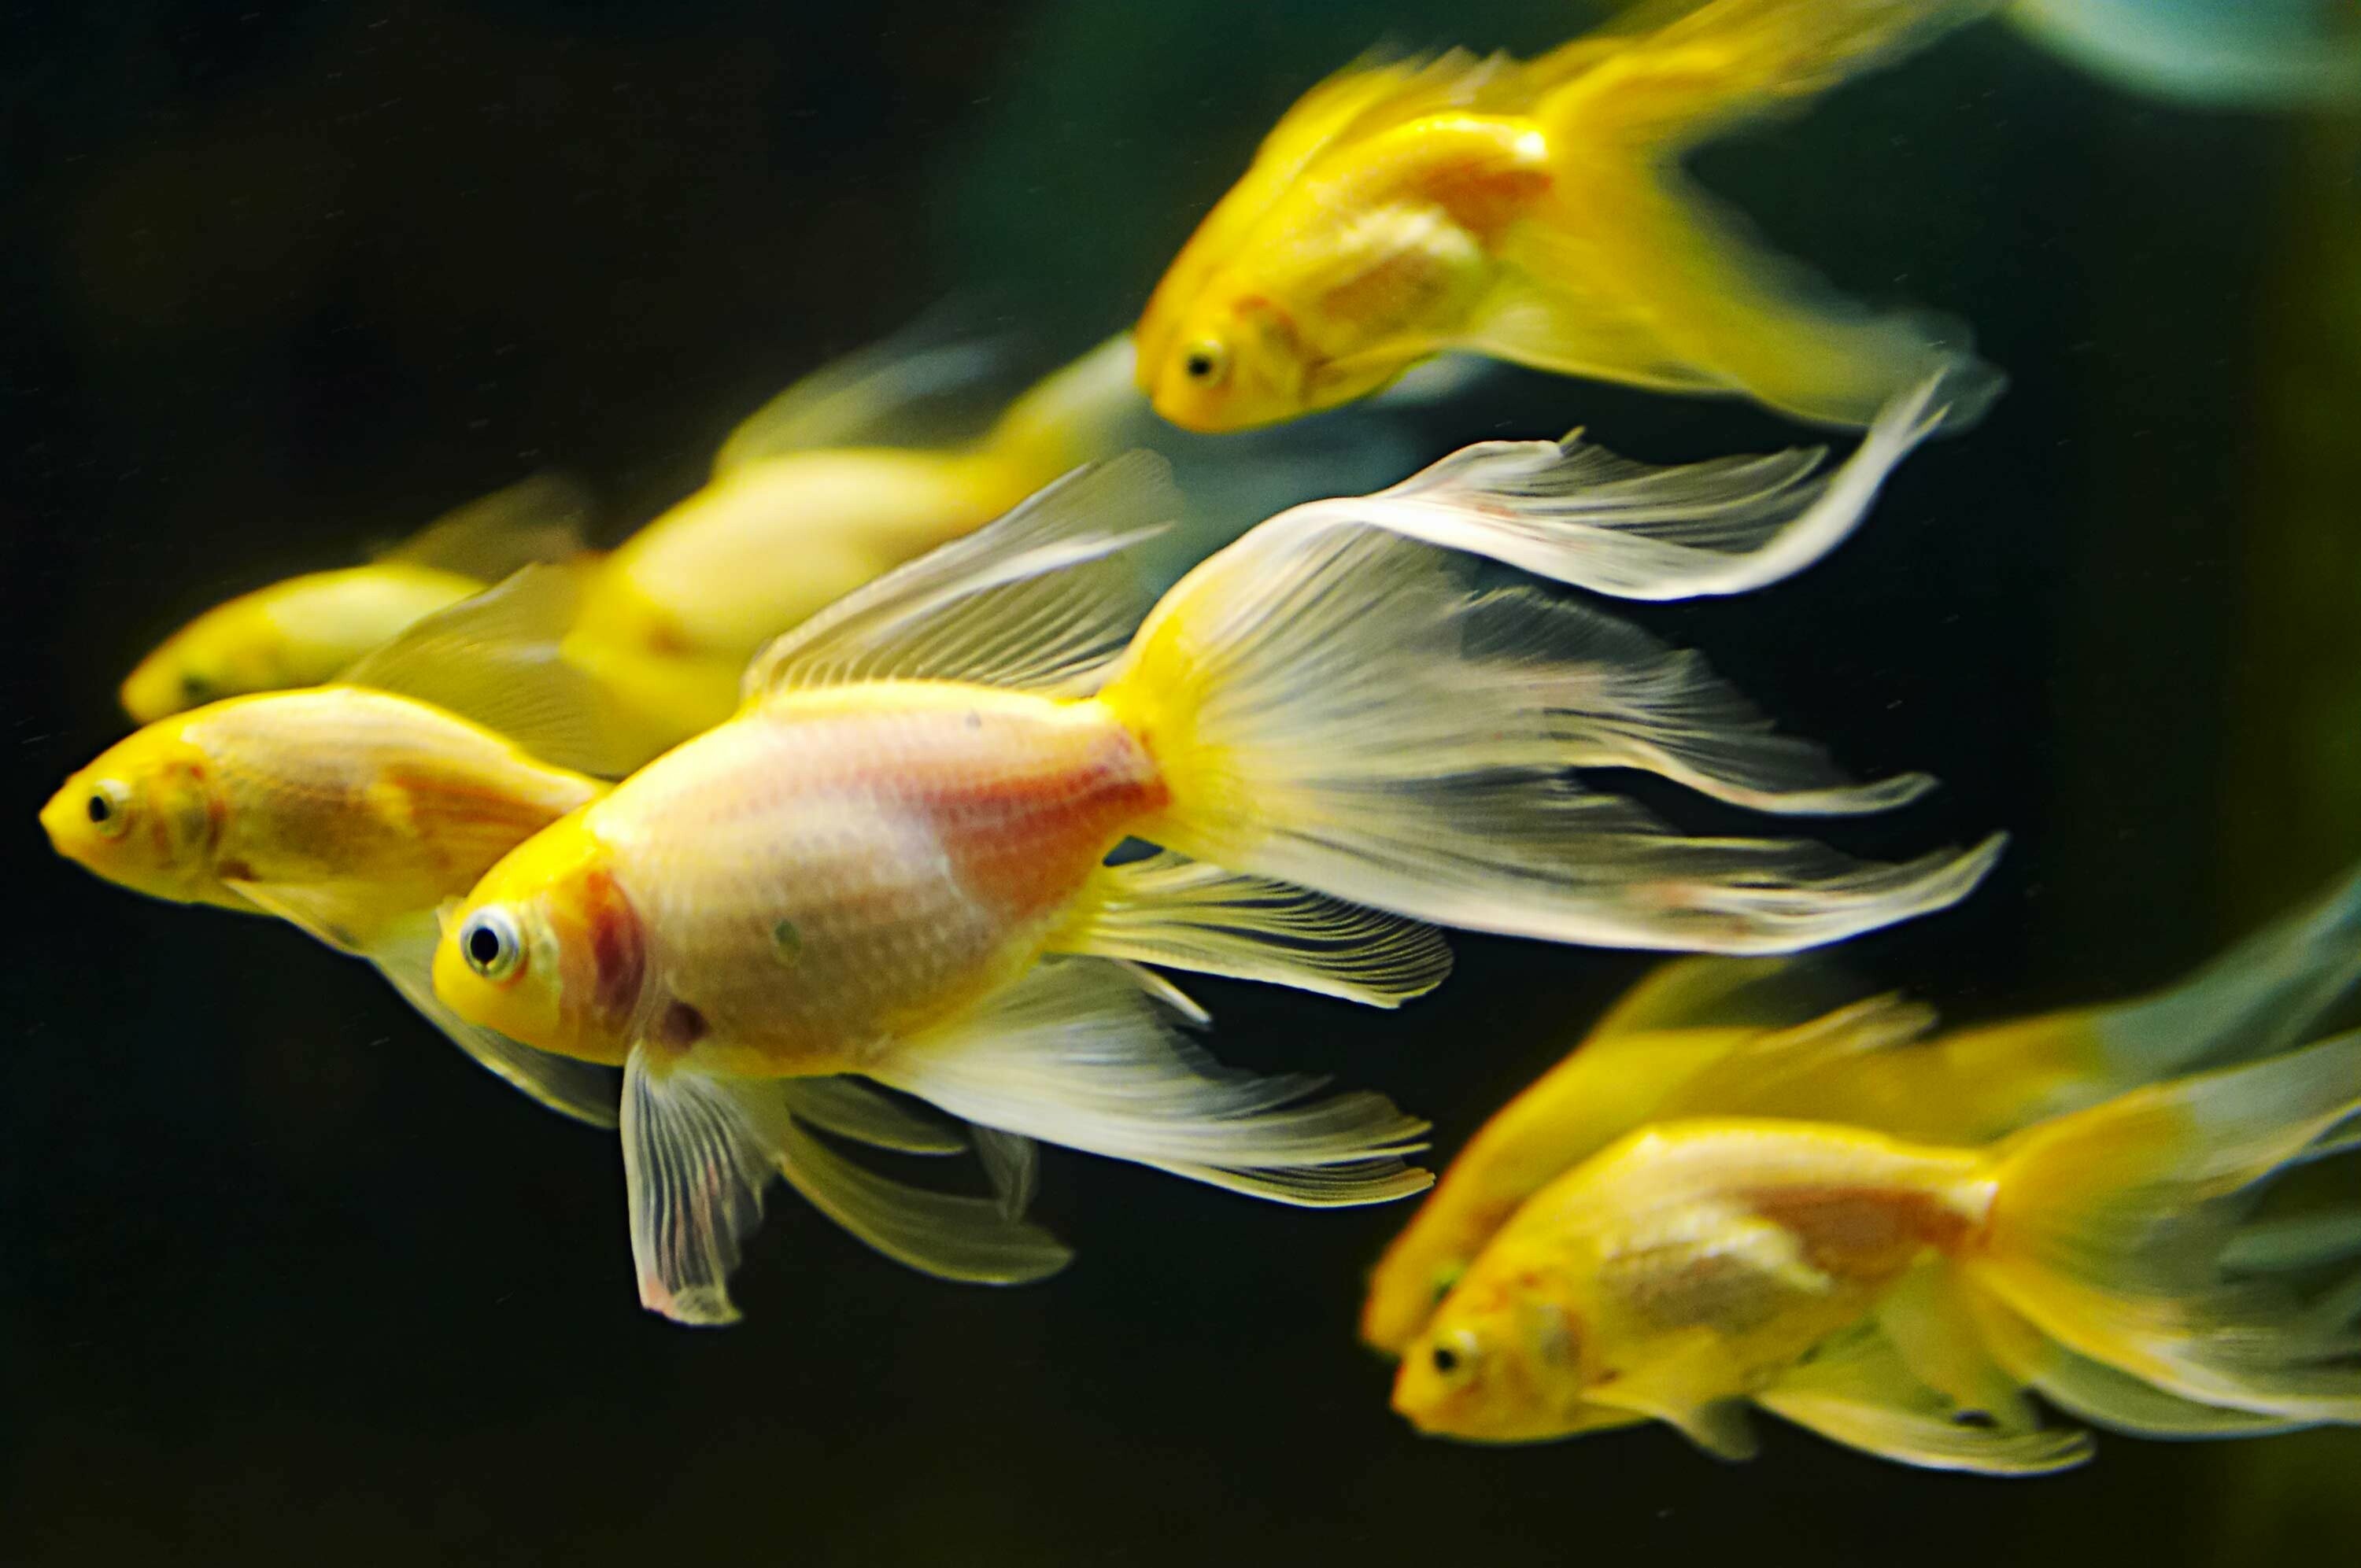 Underwater fish images, HD desktop backgrounds, Mobile exclusives, Goldfish beauty, 3000x2000 HD Desktop